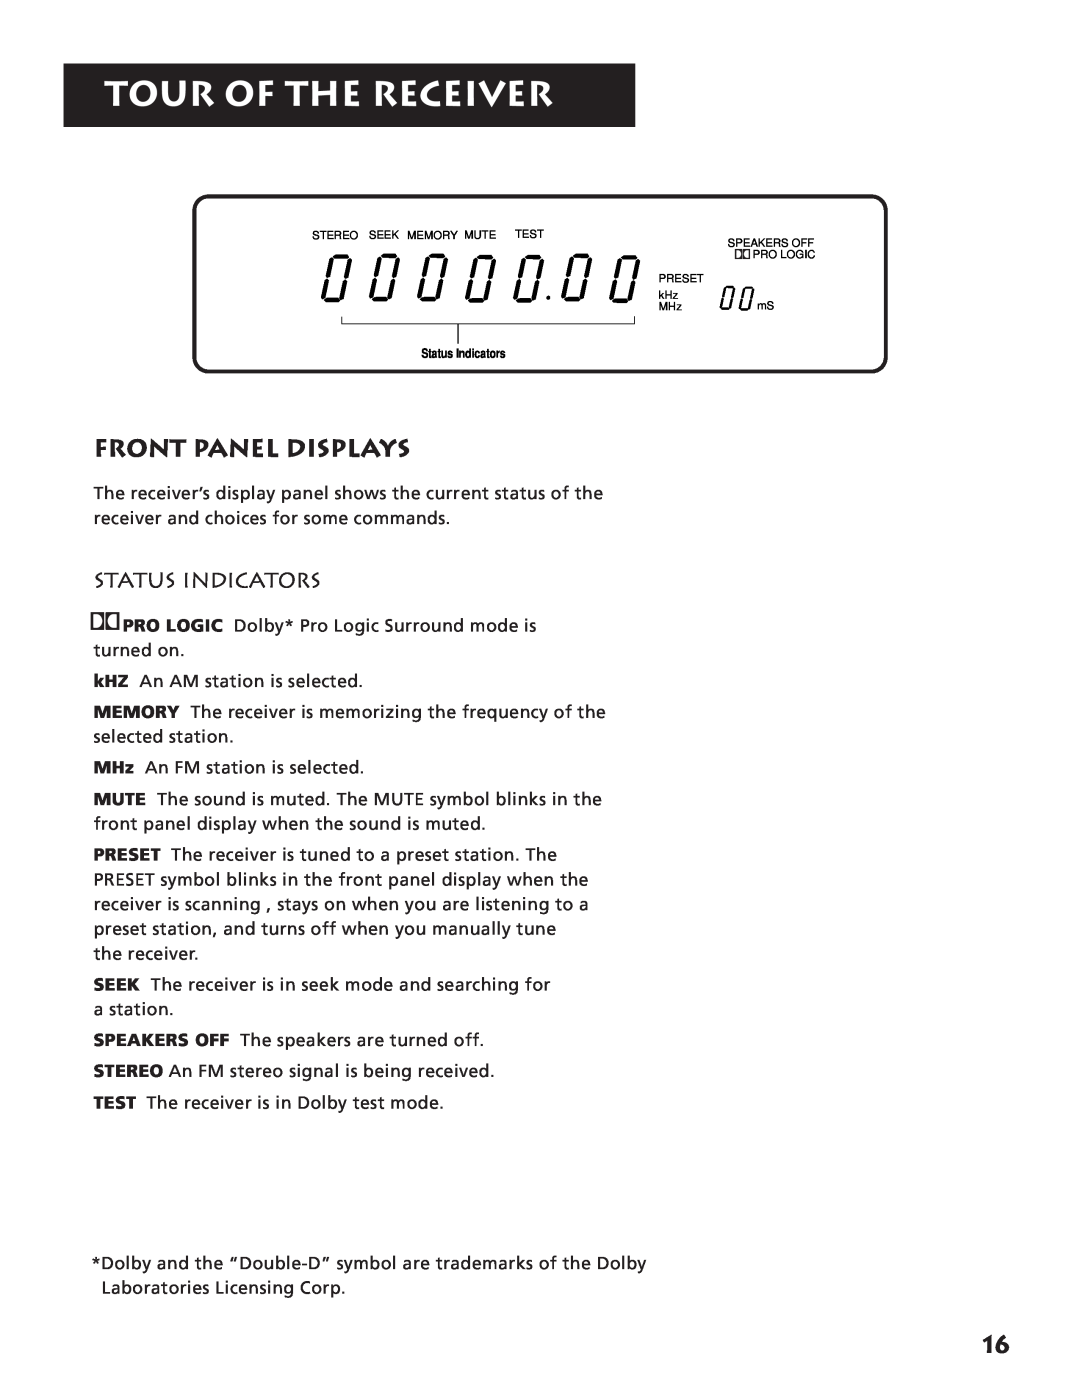 RCA RV3693 manual Front Panel Displays, Tour Of The Receiver, Status Indicators 